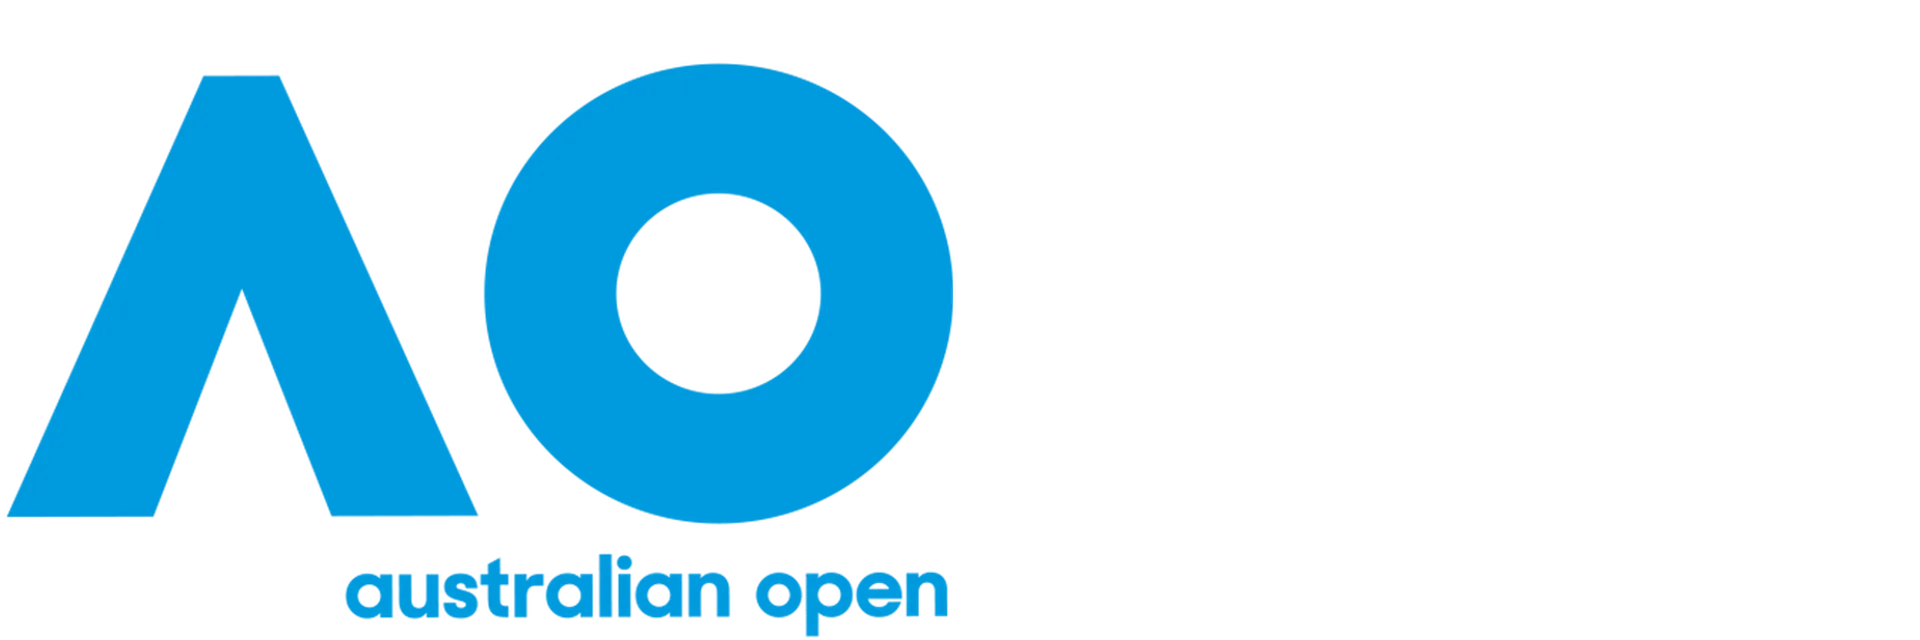 Burger Hilsen status Australian Open Tennis 2019 Djokovic v Nadal - Men's Singles Final, Watch  TV Online